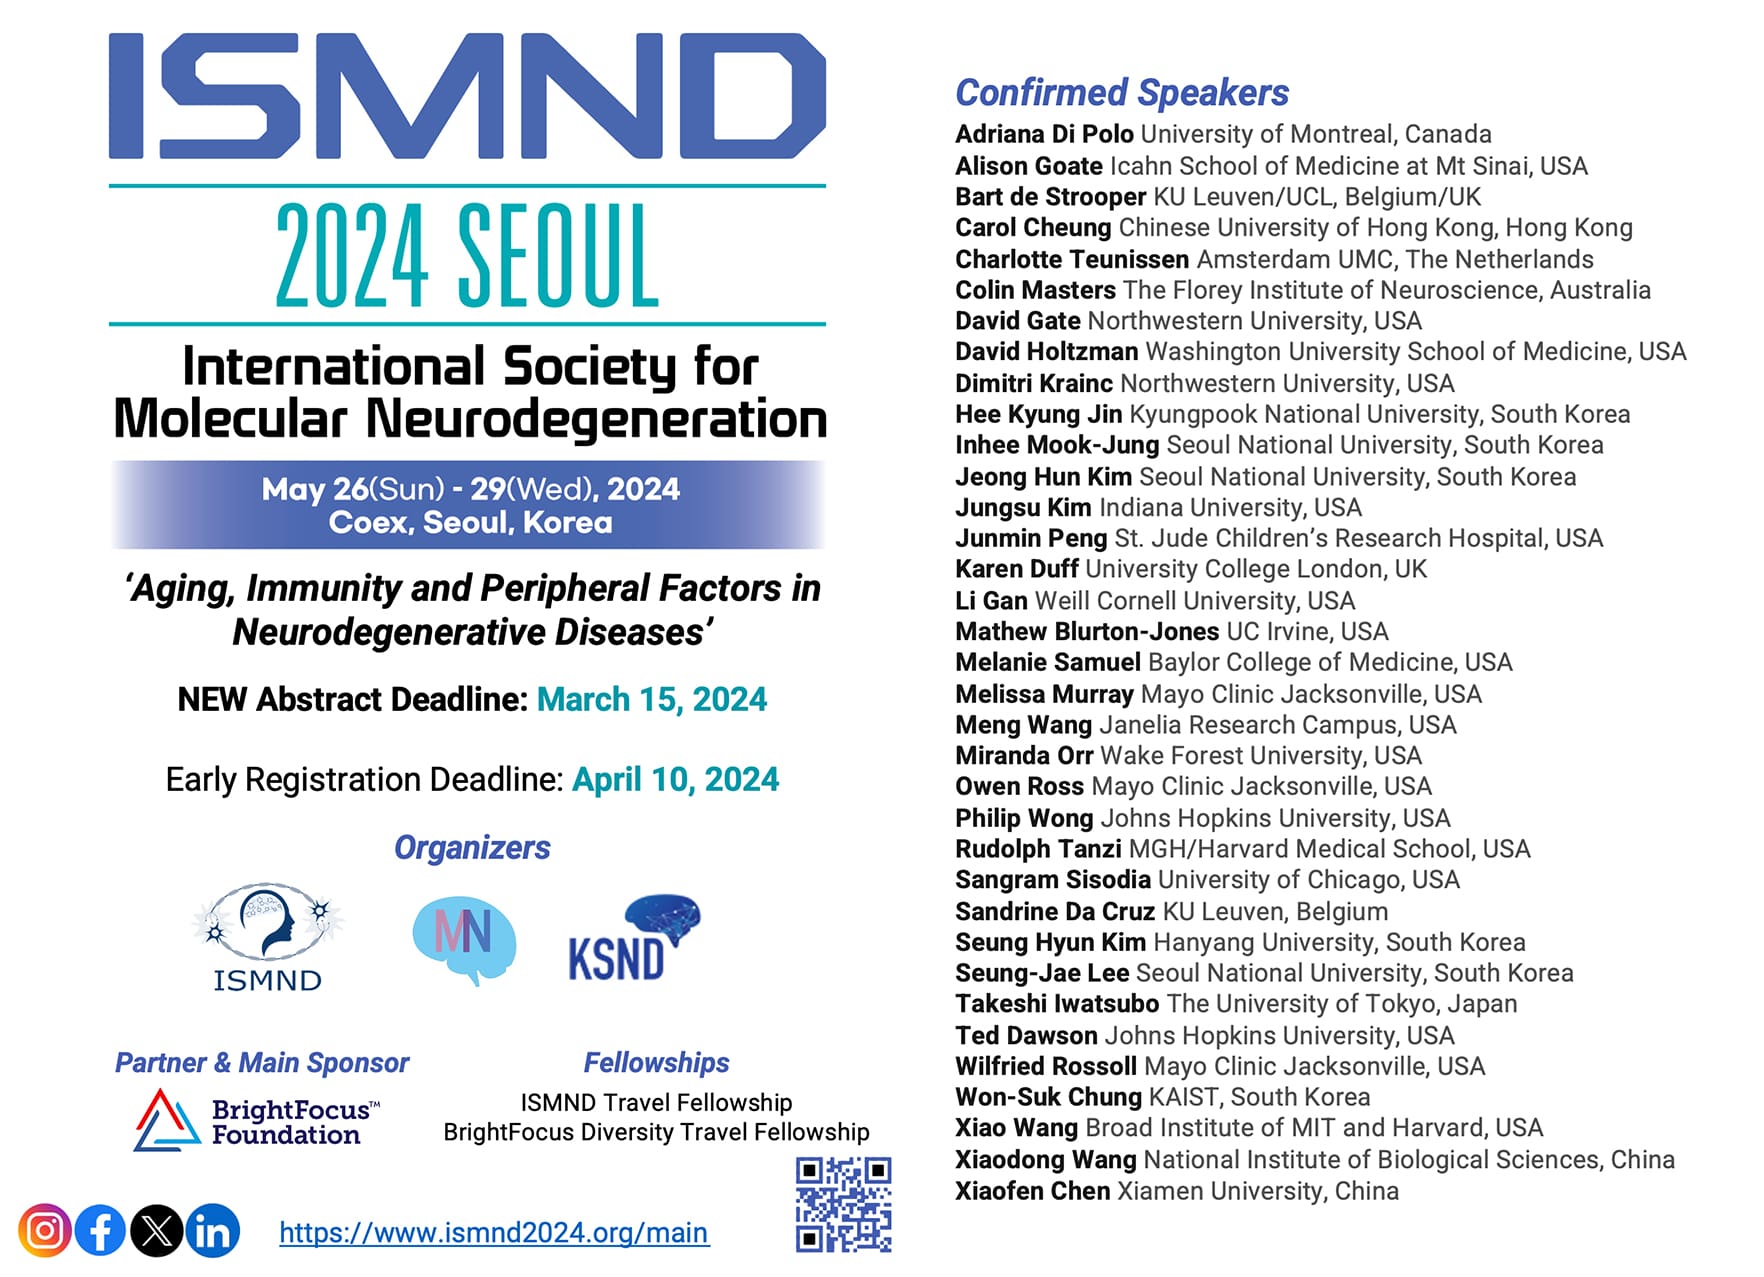 ISMND 2024, May 27-29, 2024 in Seoul, South Korea